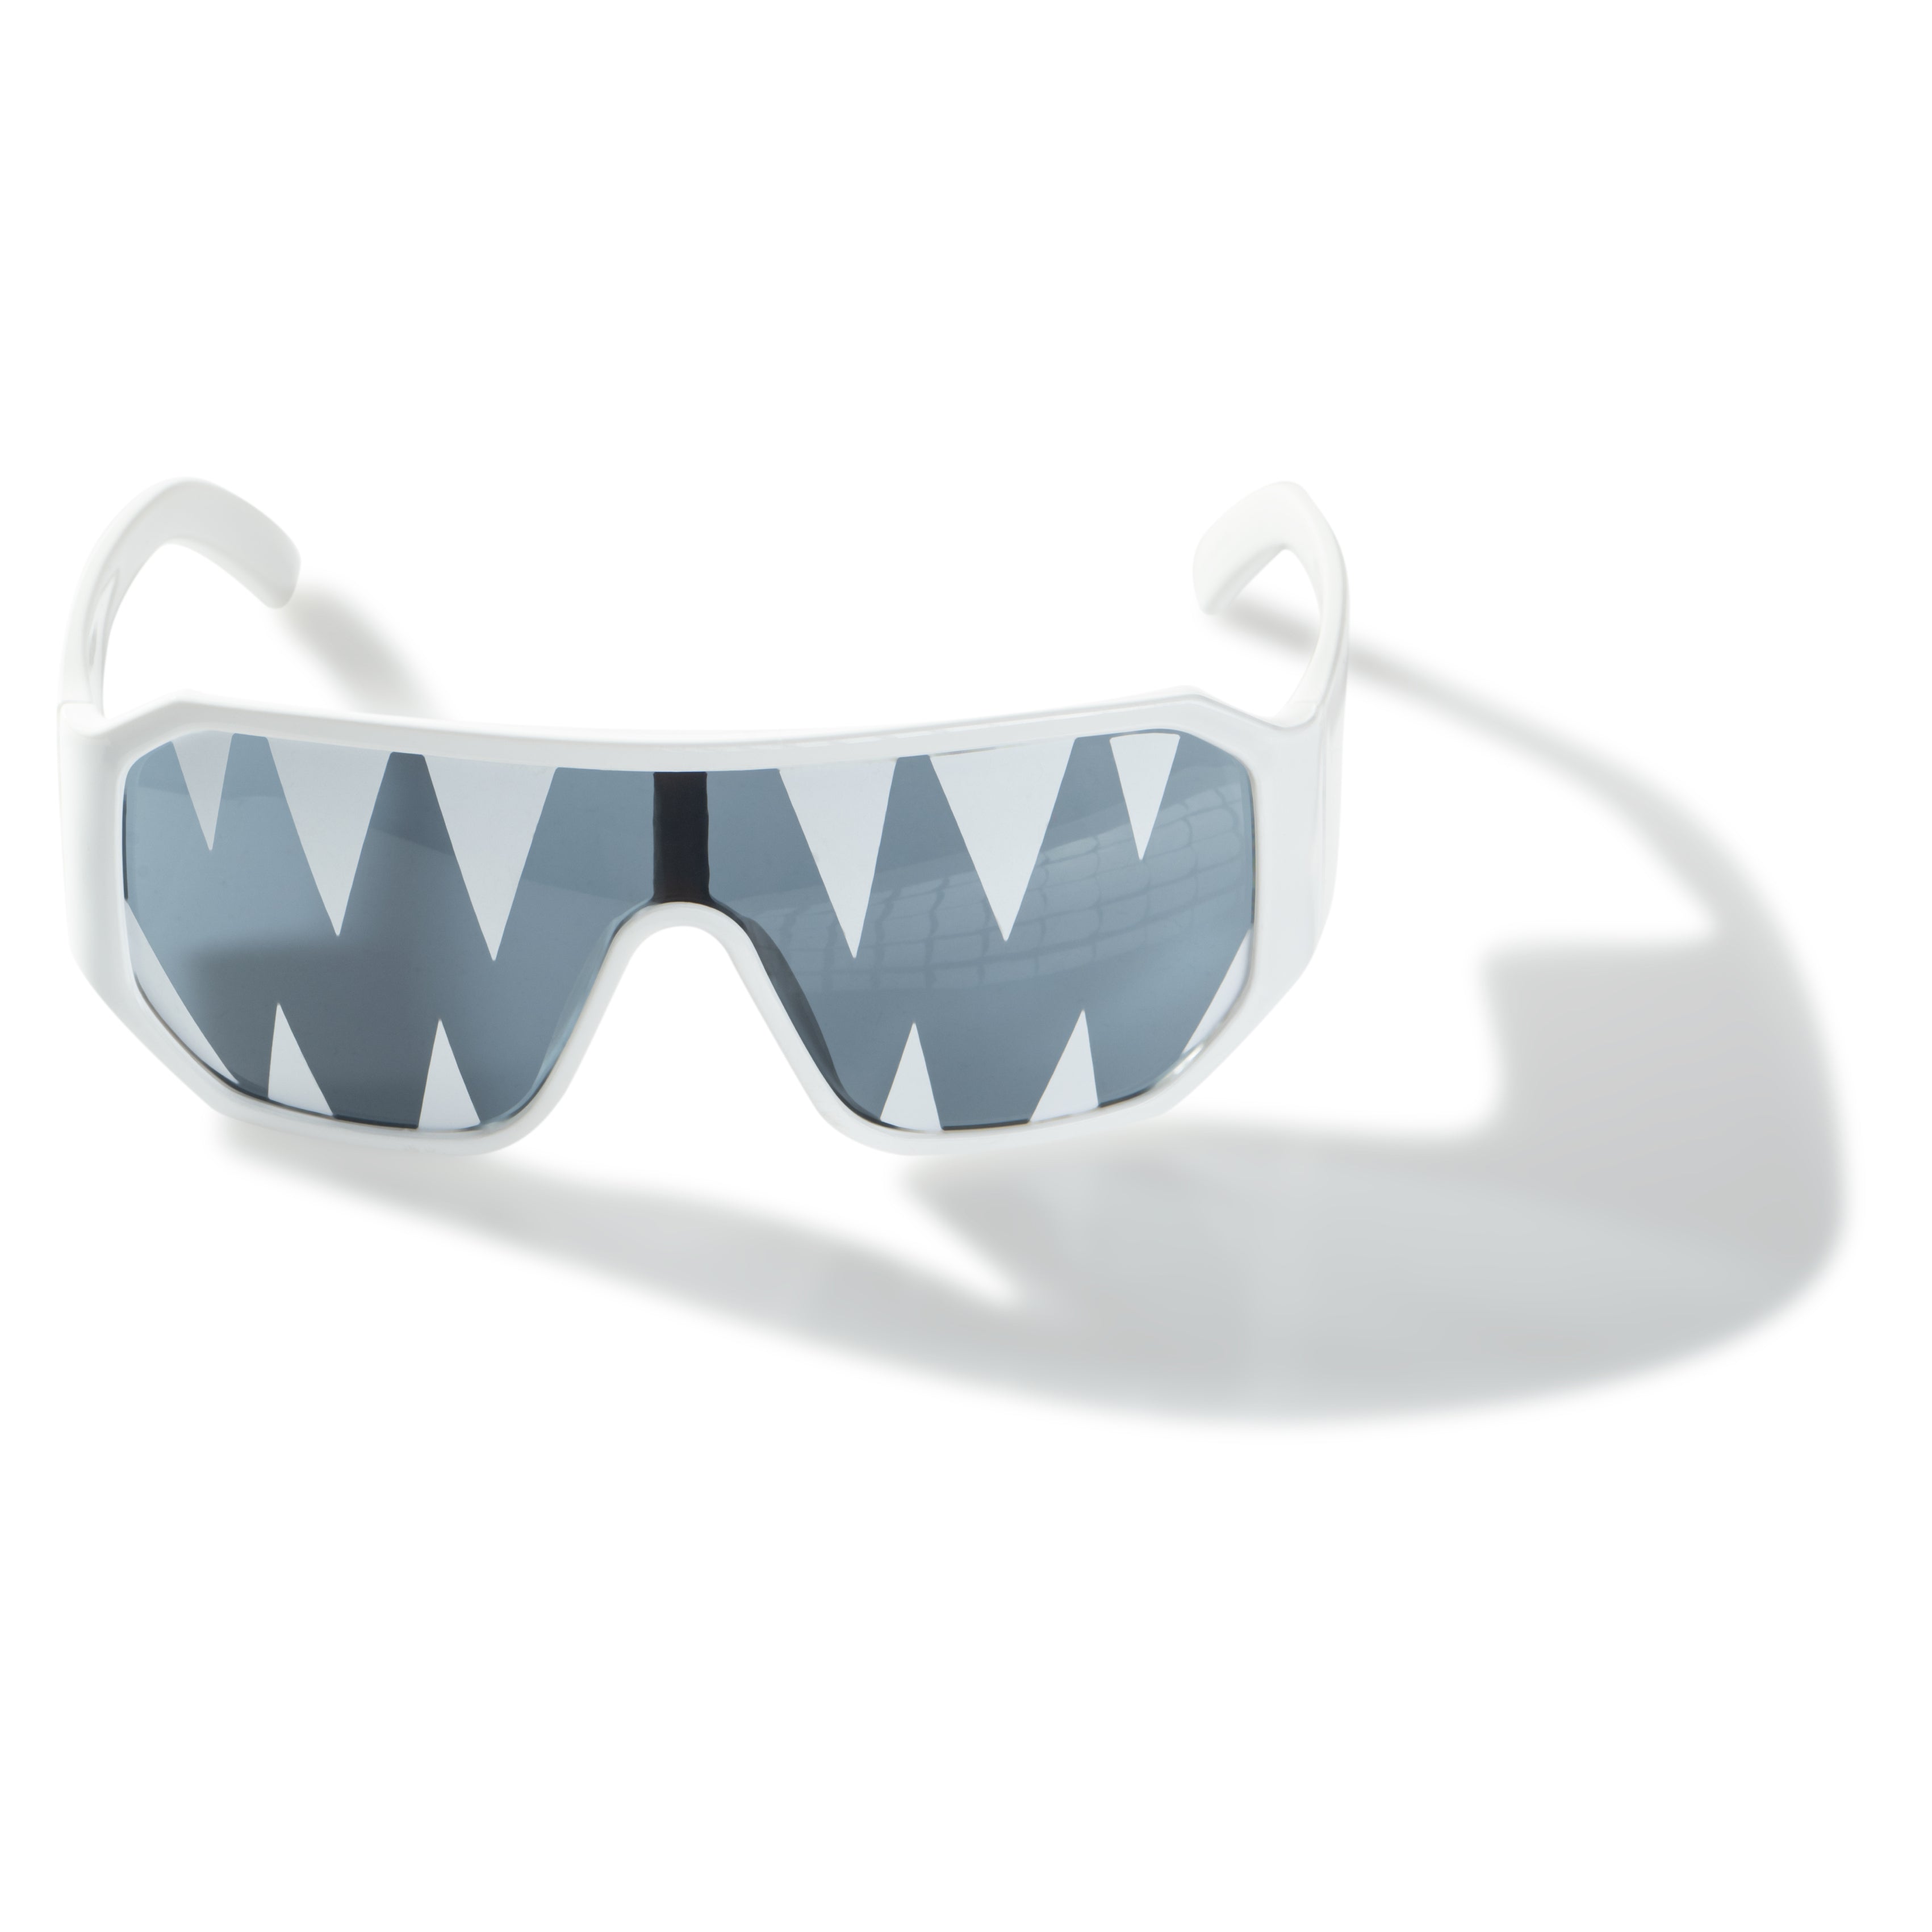 Machoman Randy Savage Costume Accessory Cosplay Sunglasses White